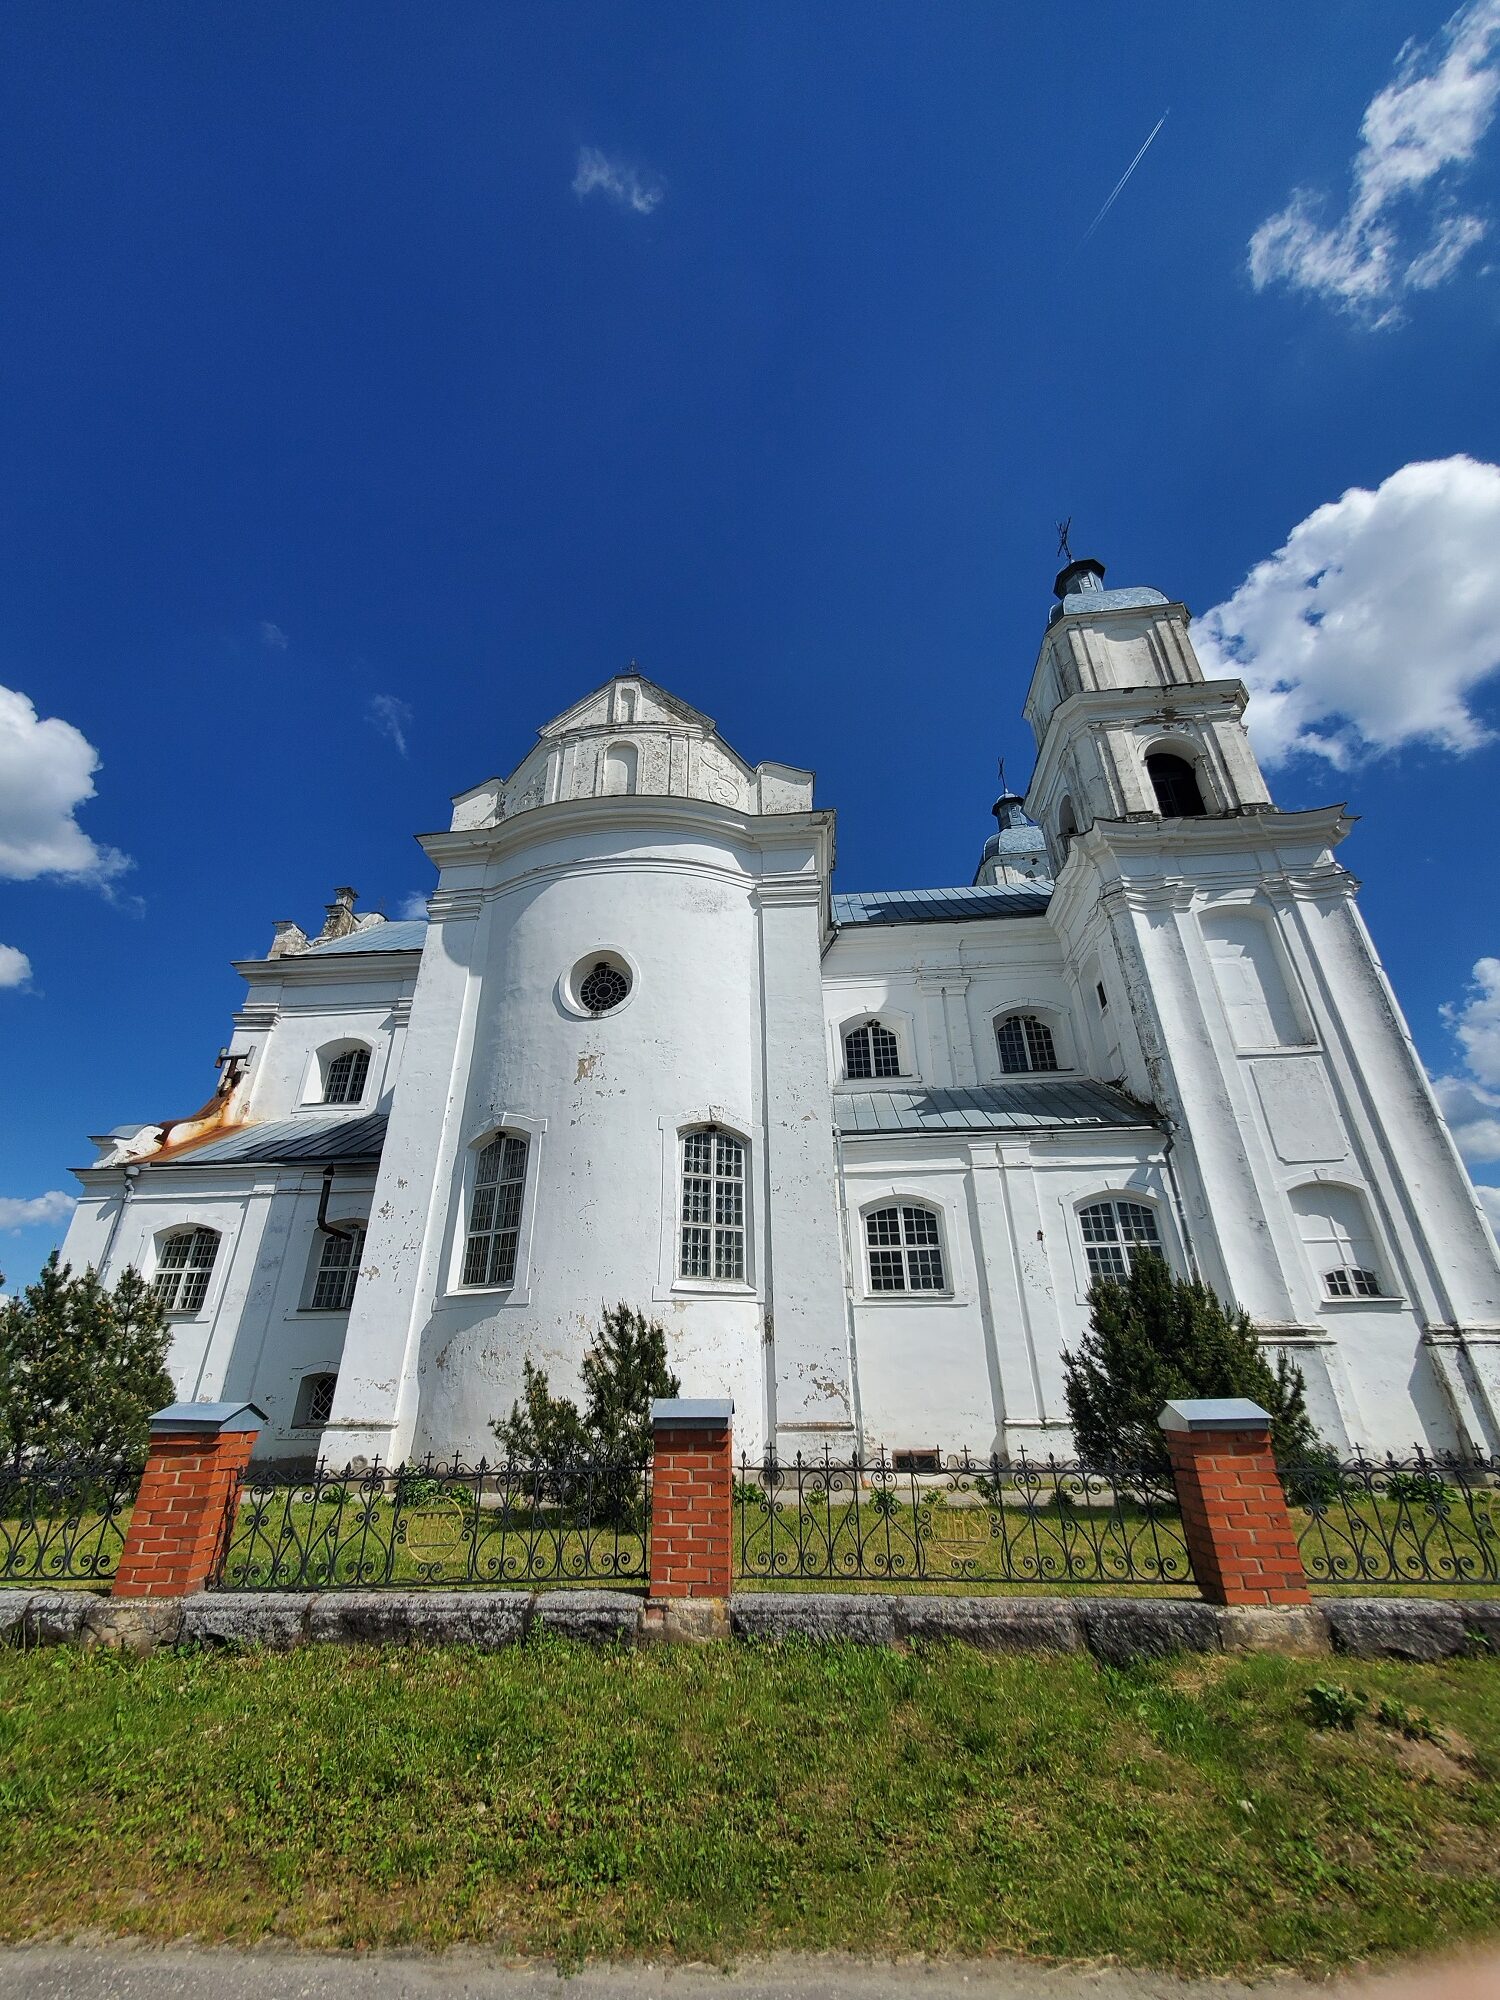 20200606 151011 rotated - Костел Святой Троицы в деревне Дуниловичи